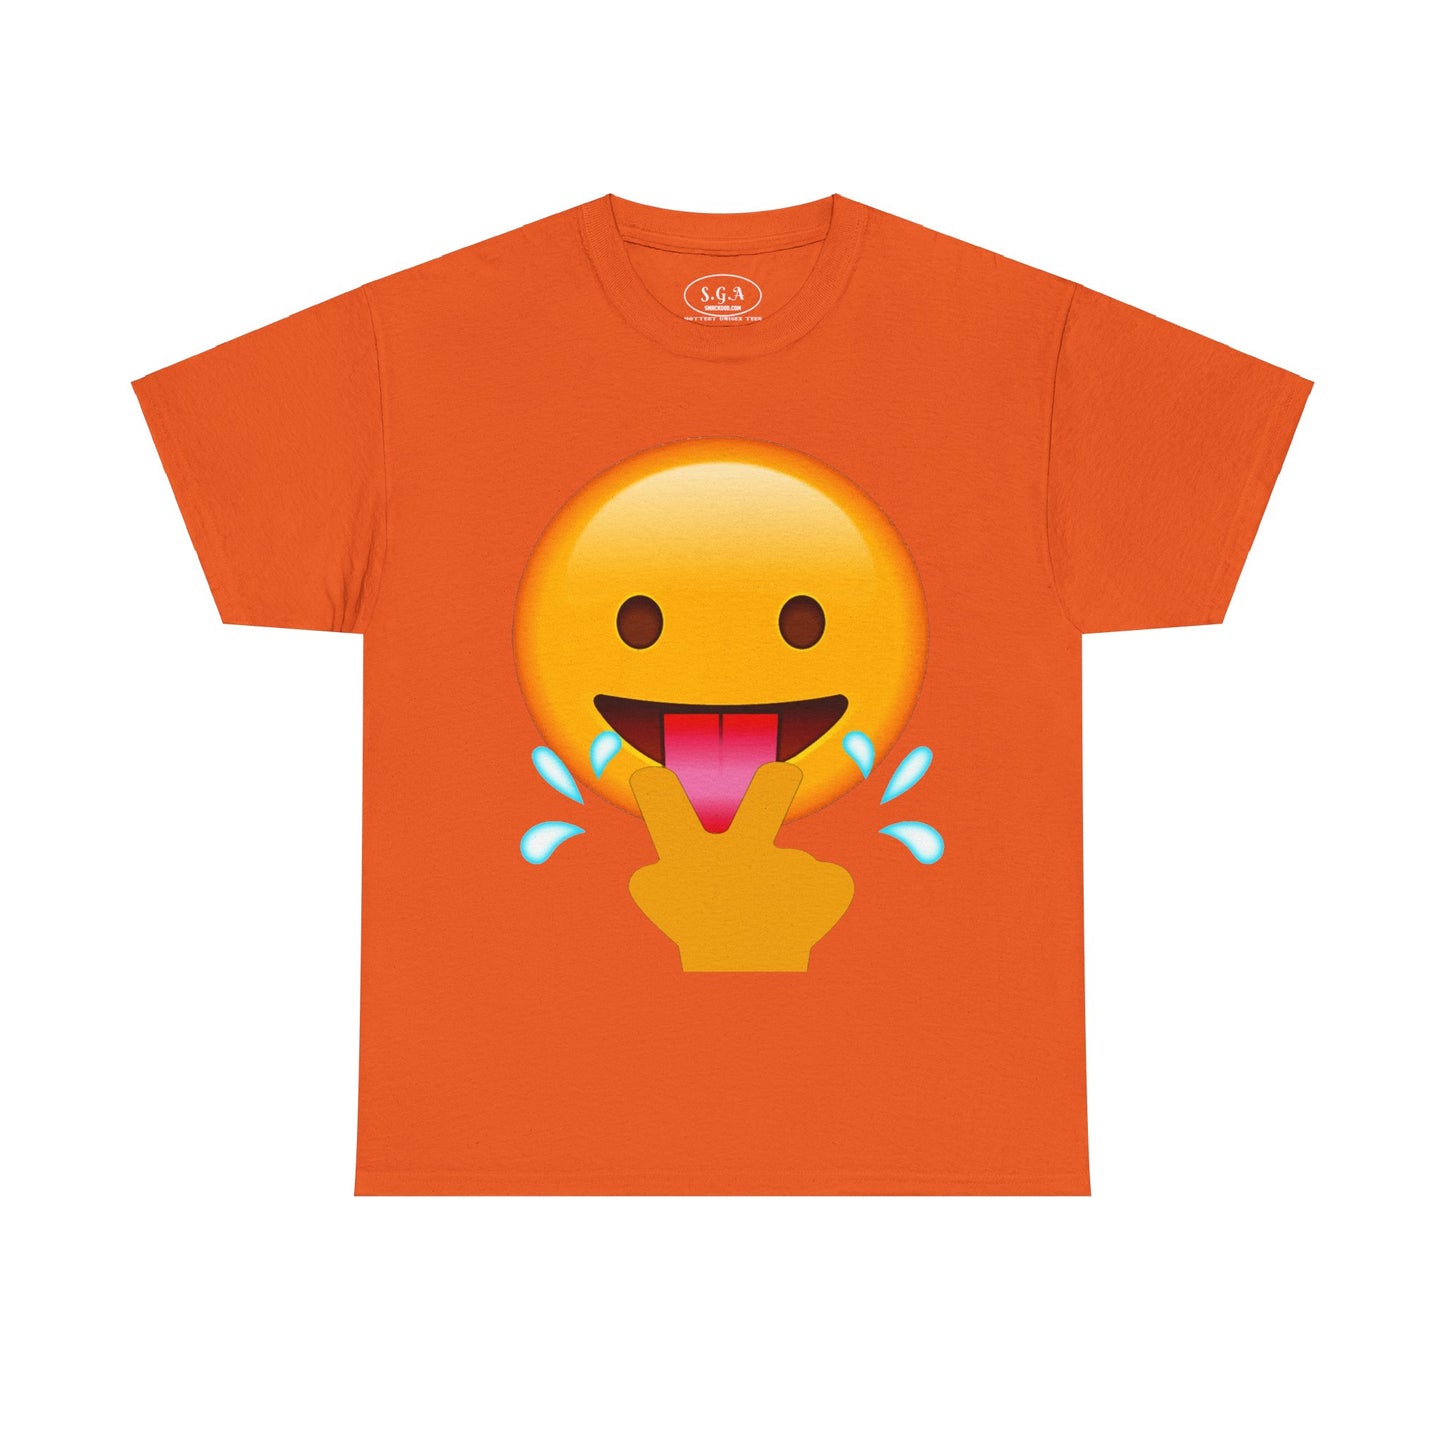 Emoji: How man licks T shirts